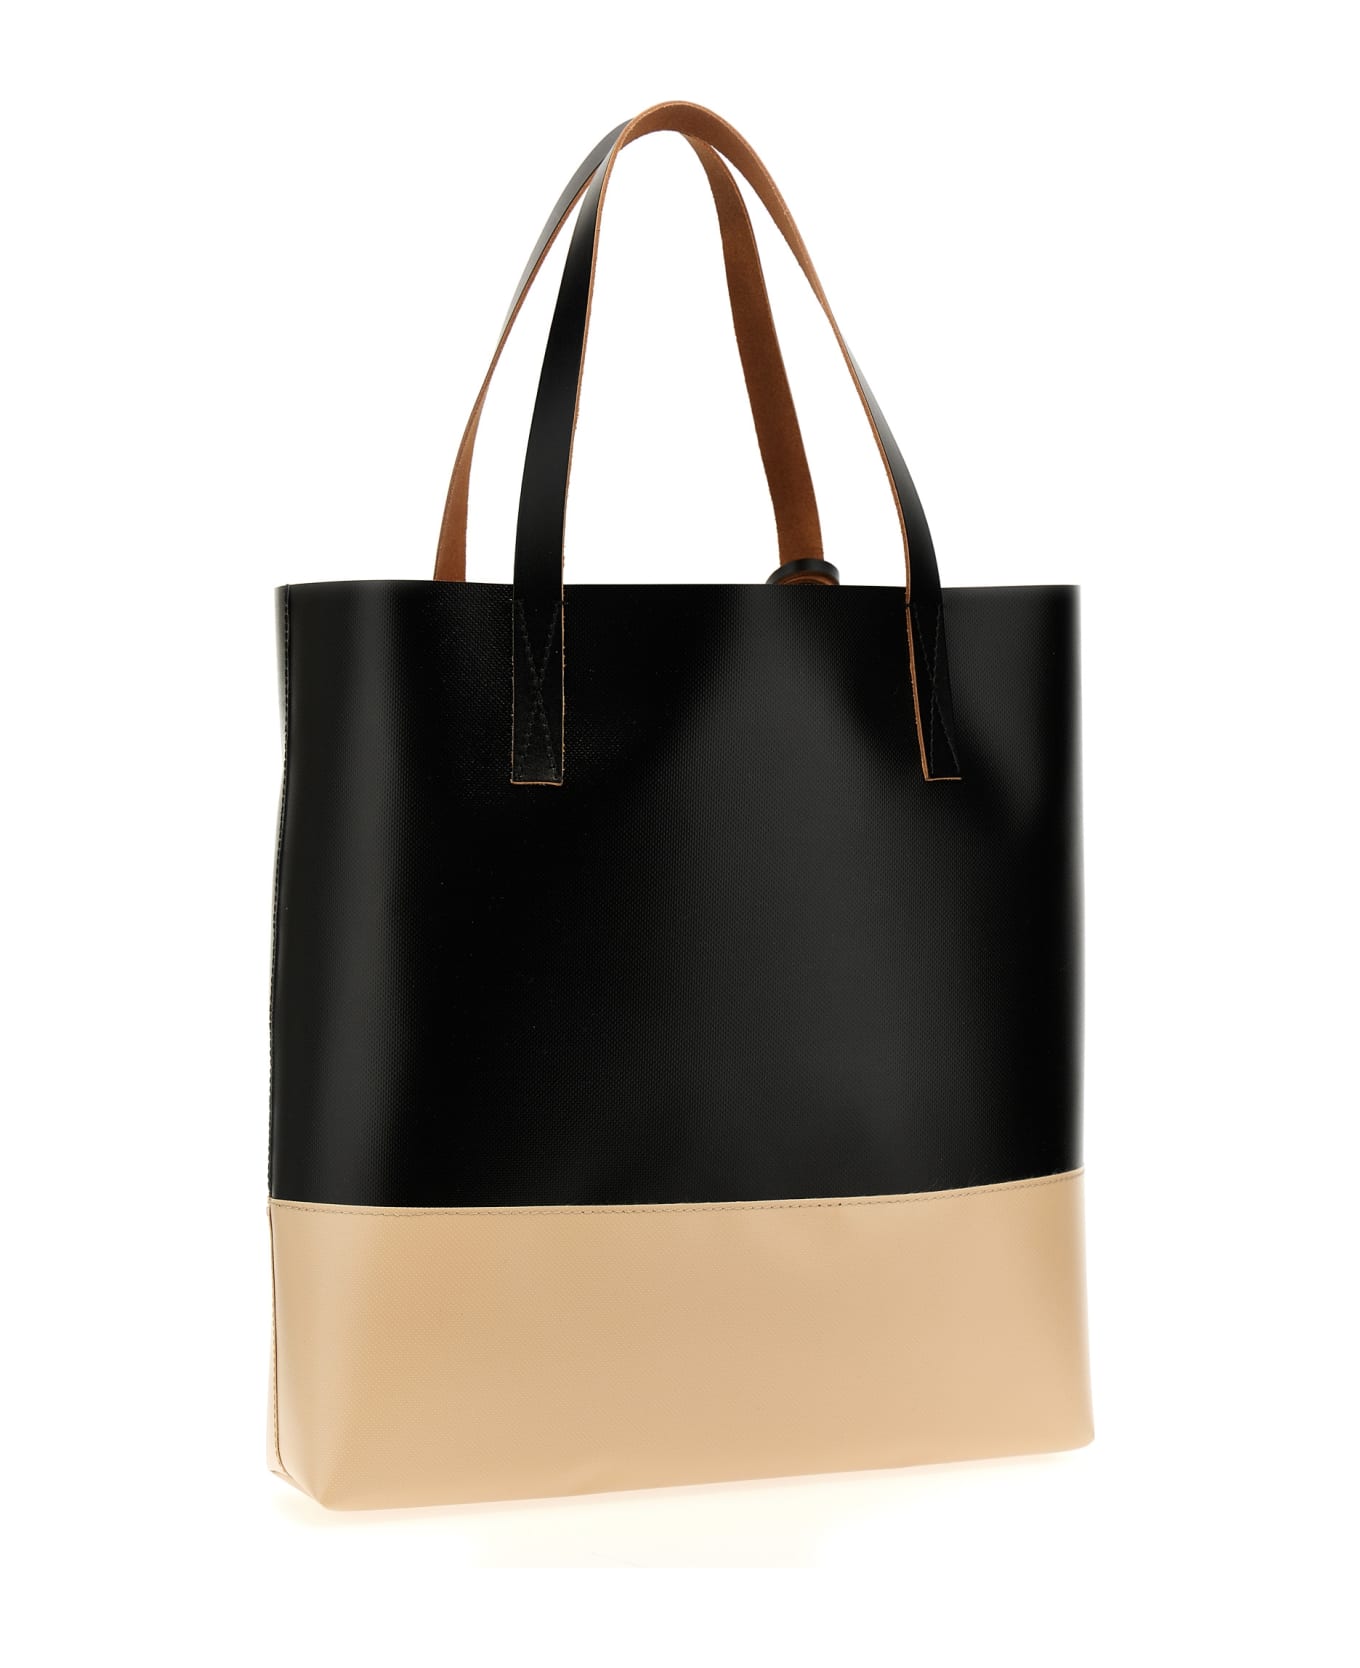 Marni 'tribeca' Shopping Bag - Black